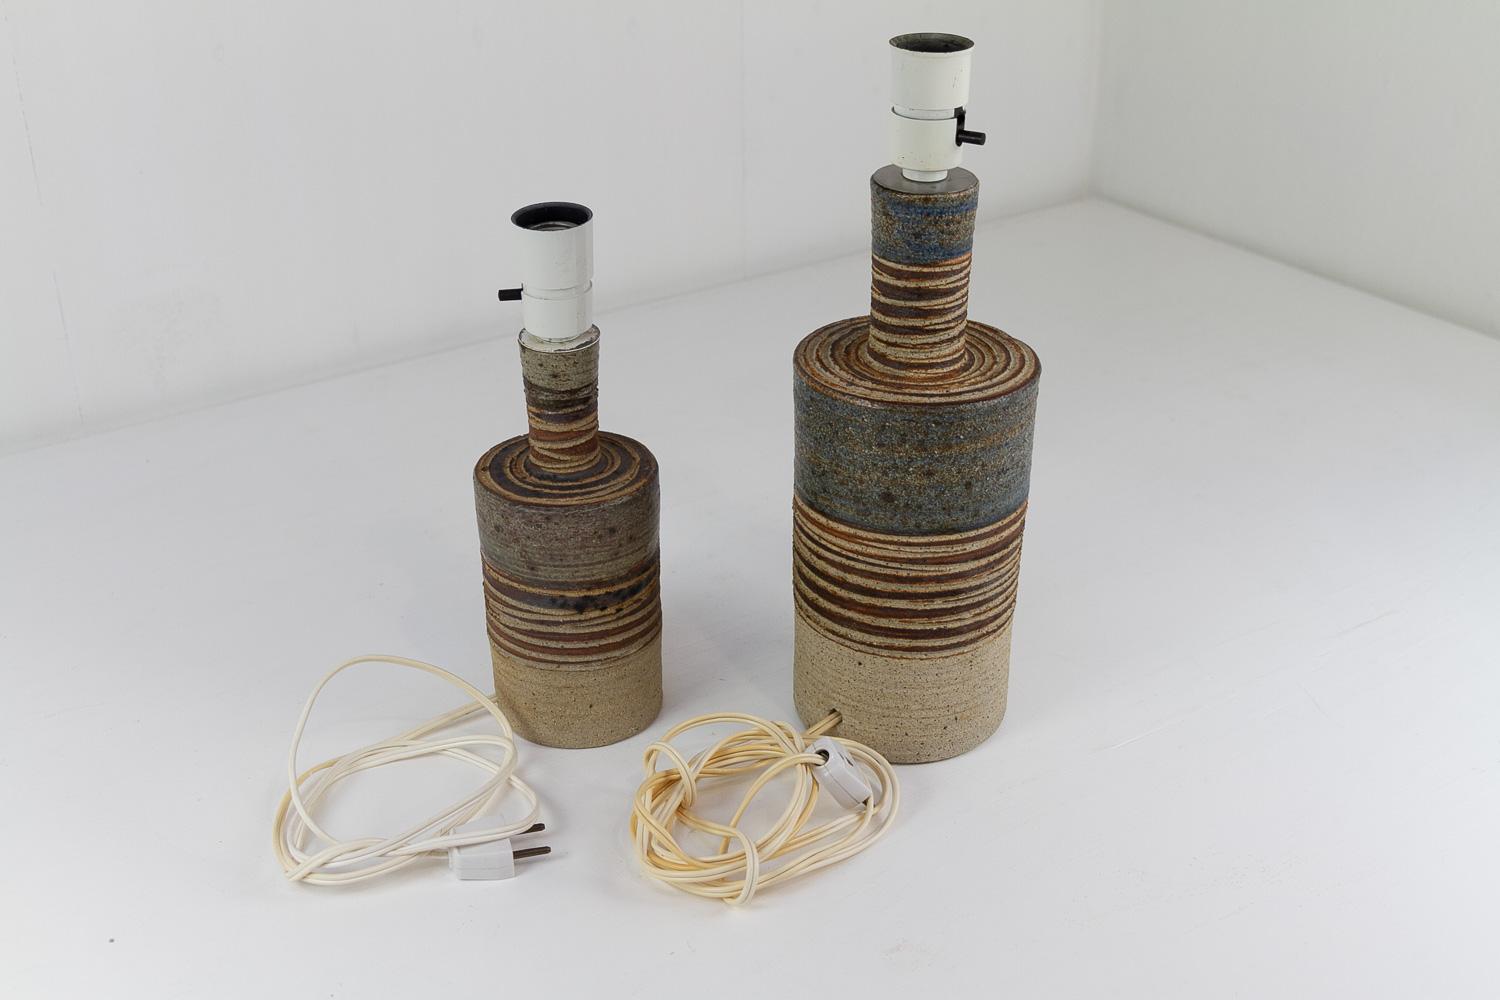 Danish Modern Tue Poulsen Ceramic Table Lamps, 1960s. Set of 2. For Sale 10